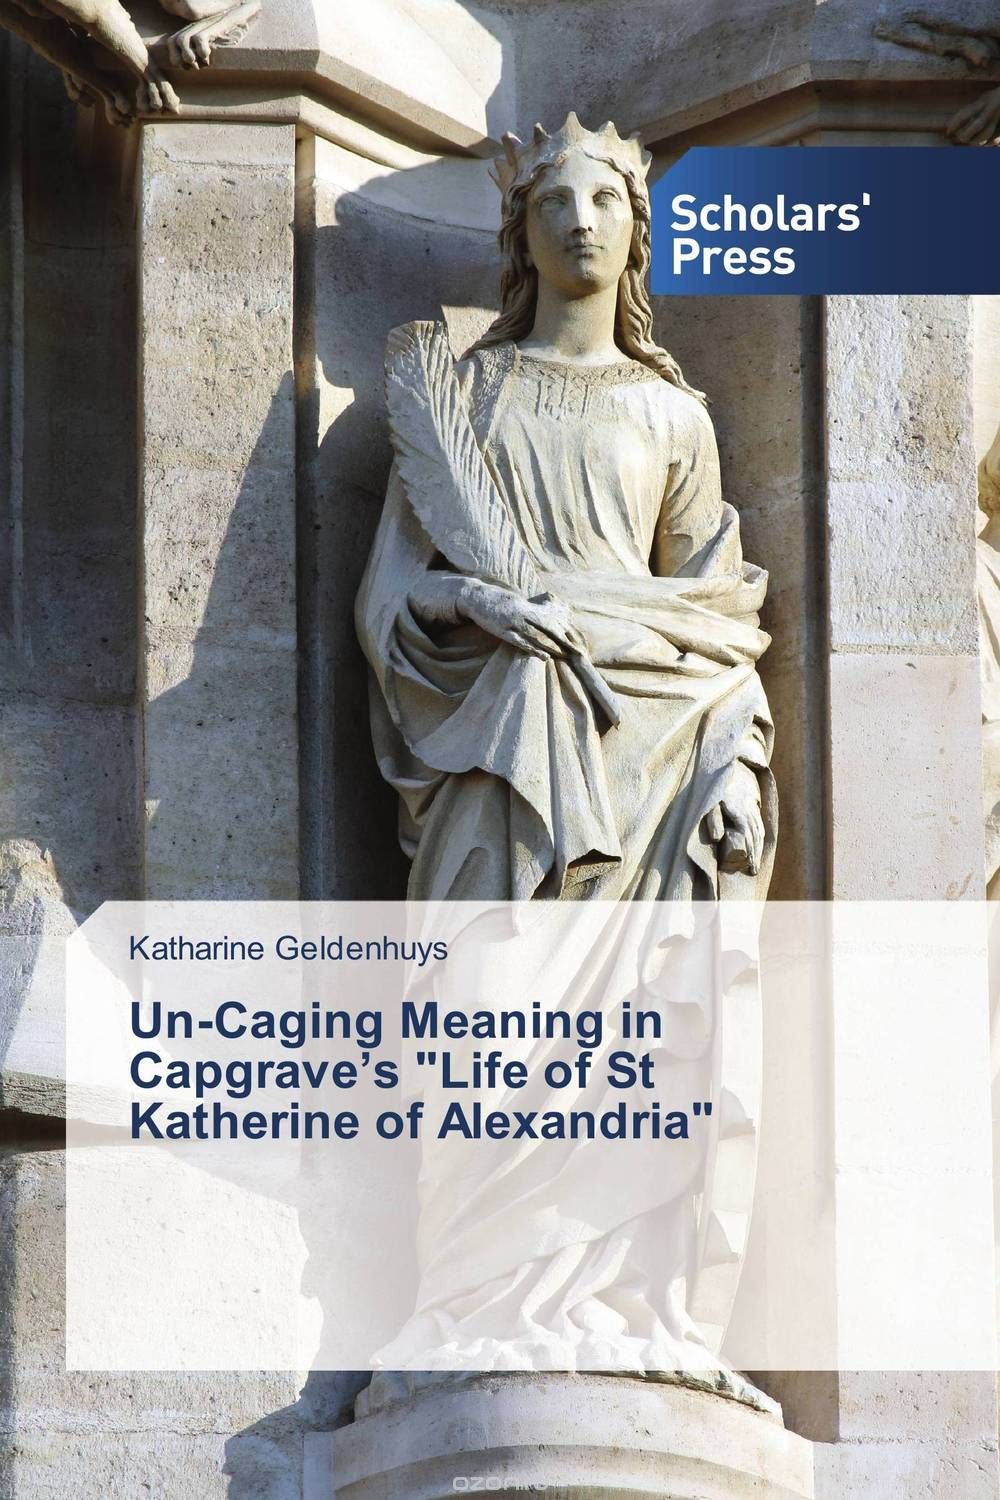 Скачать книгу "Un-Caging Meaning in Capgrave’s "Life of St Katherine of Alexandria""